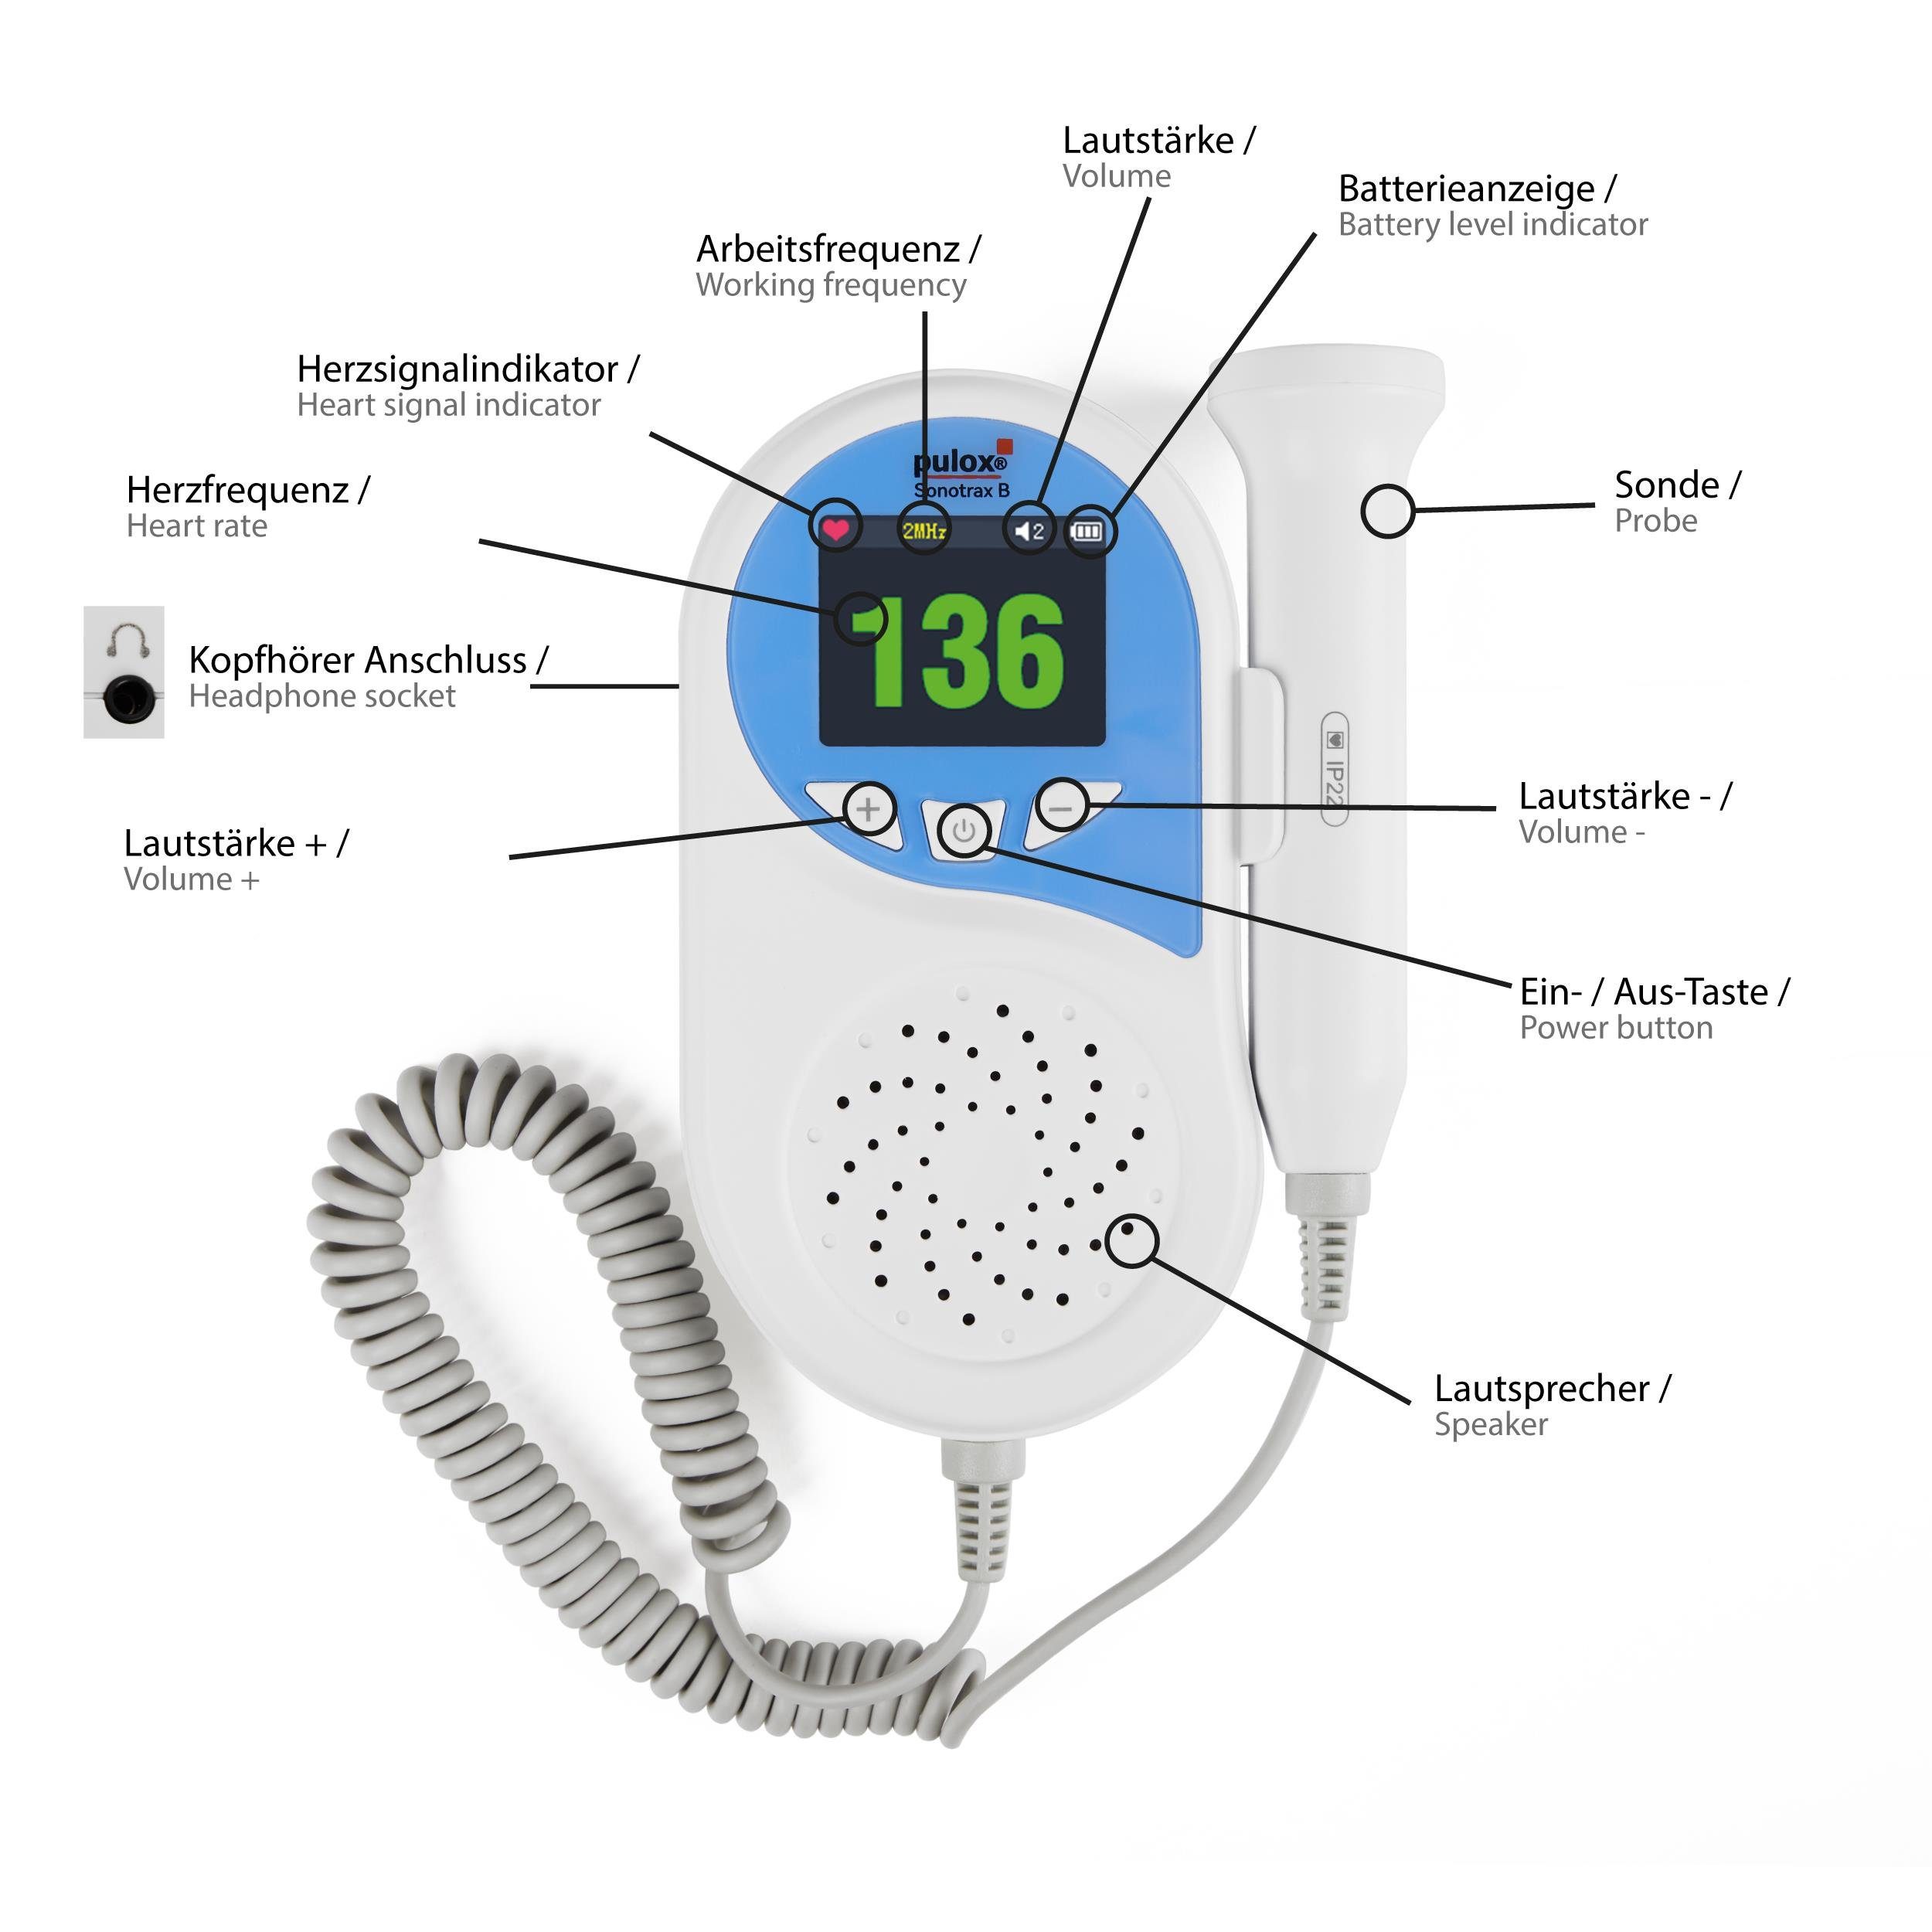 B Babyphone Ultraschall - mit Fetal-Doppler Lautsprecher pulox Sonotrax